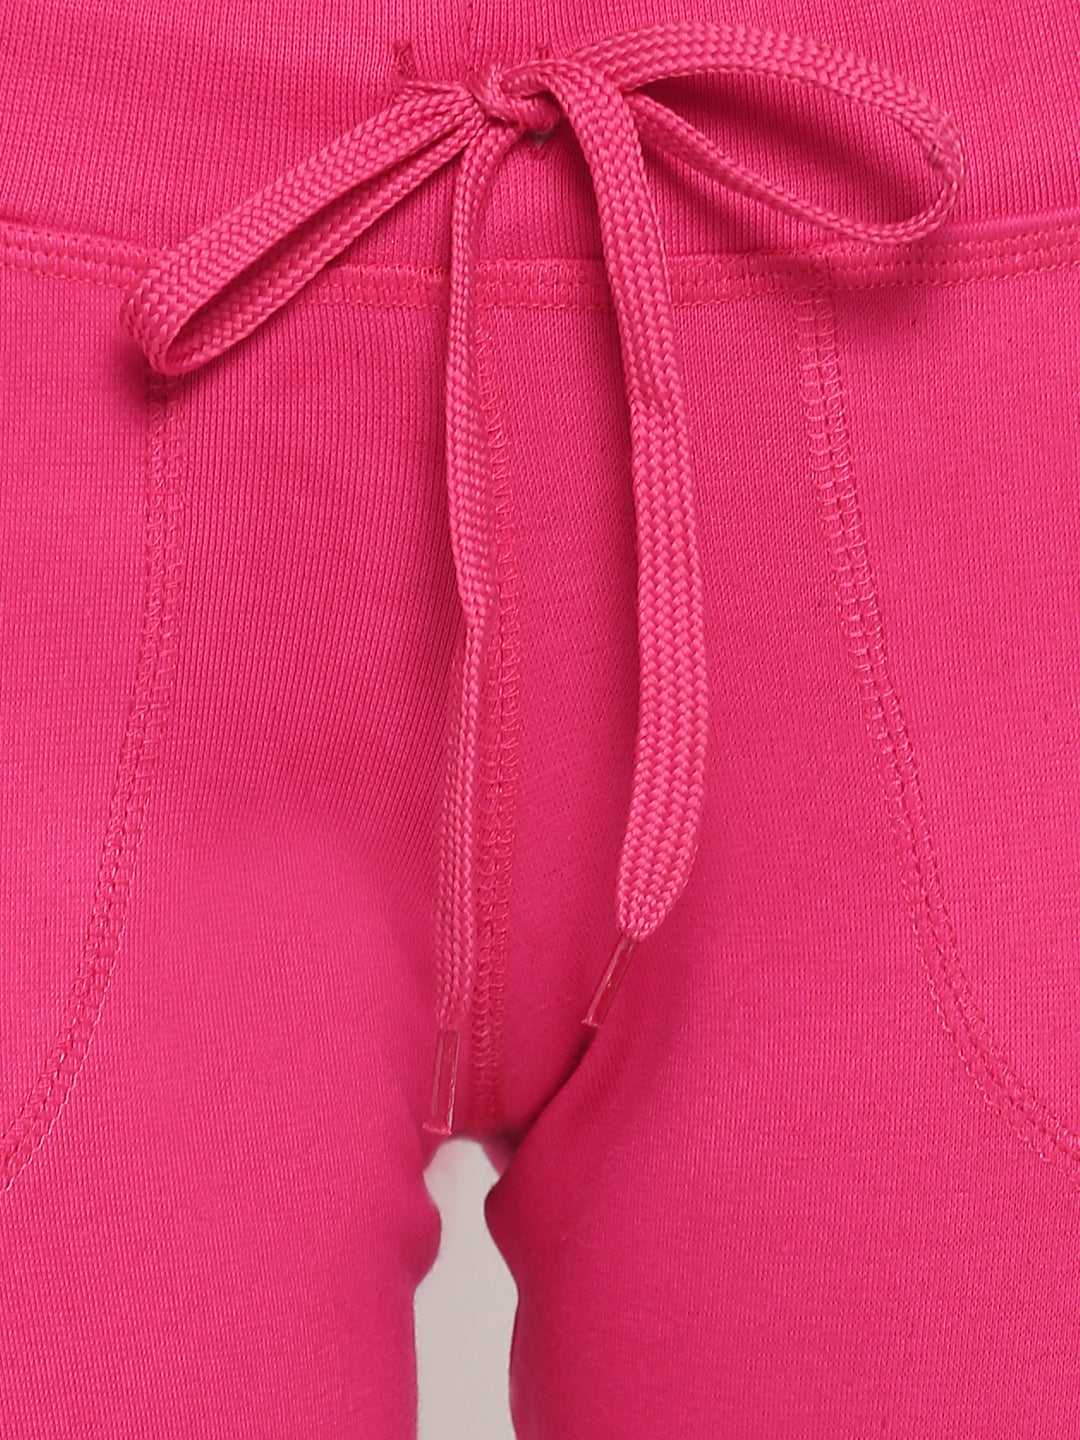 Women's Pink Cotton Shorts - StyleStone